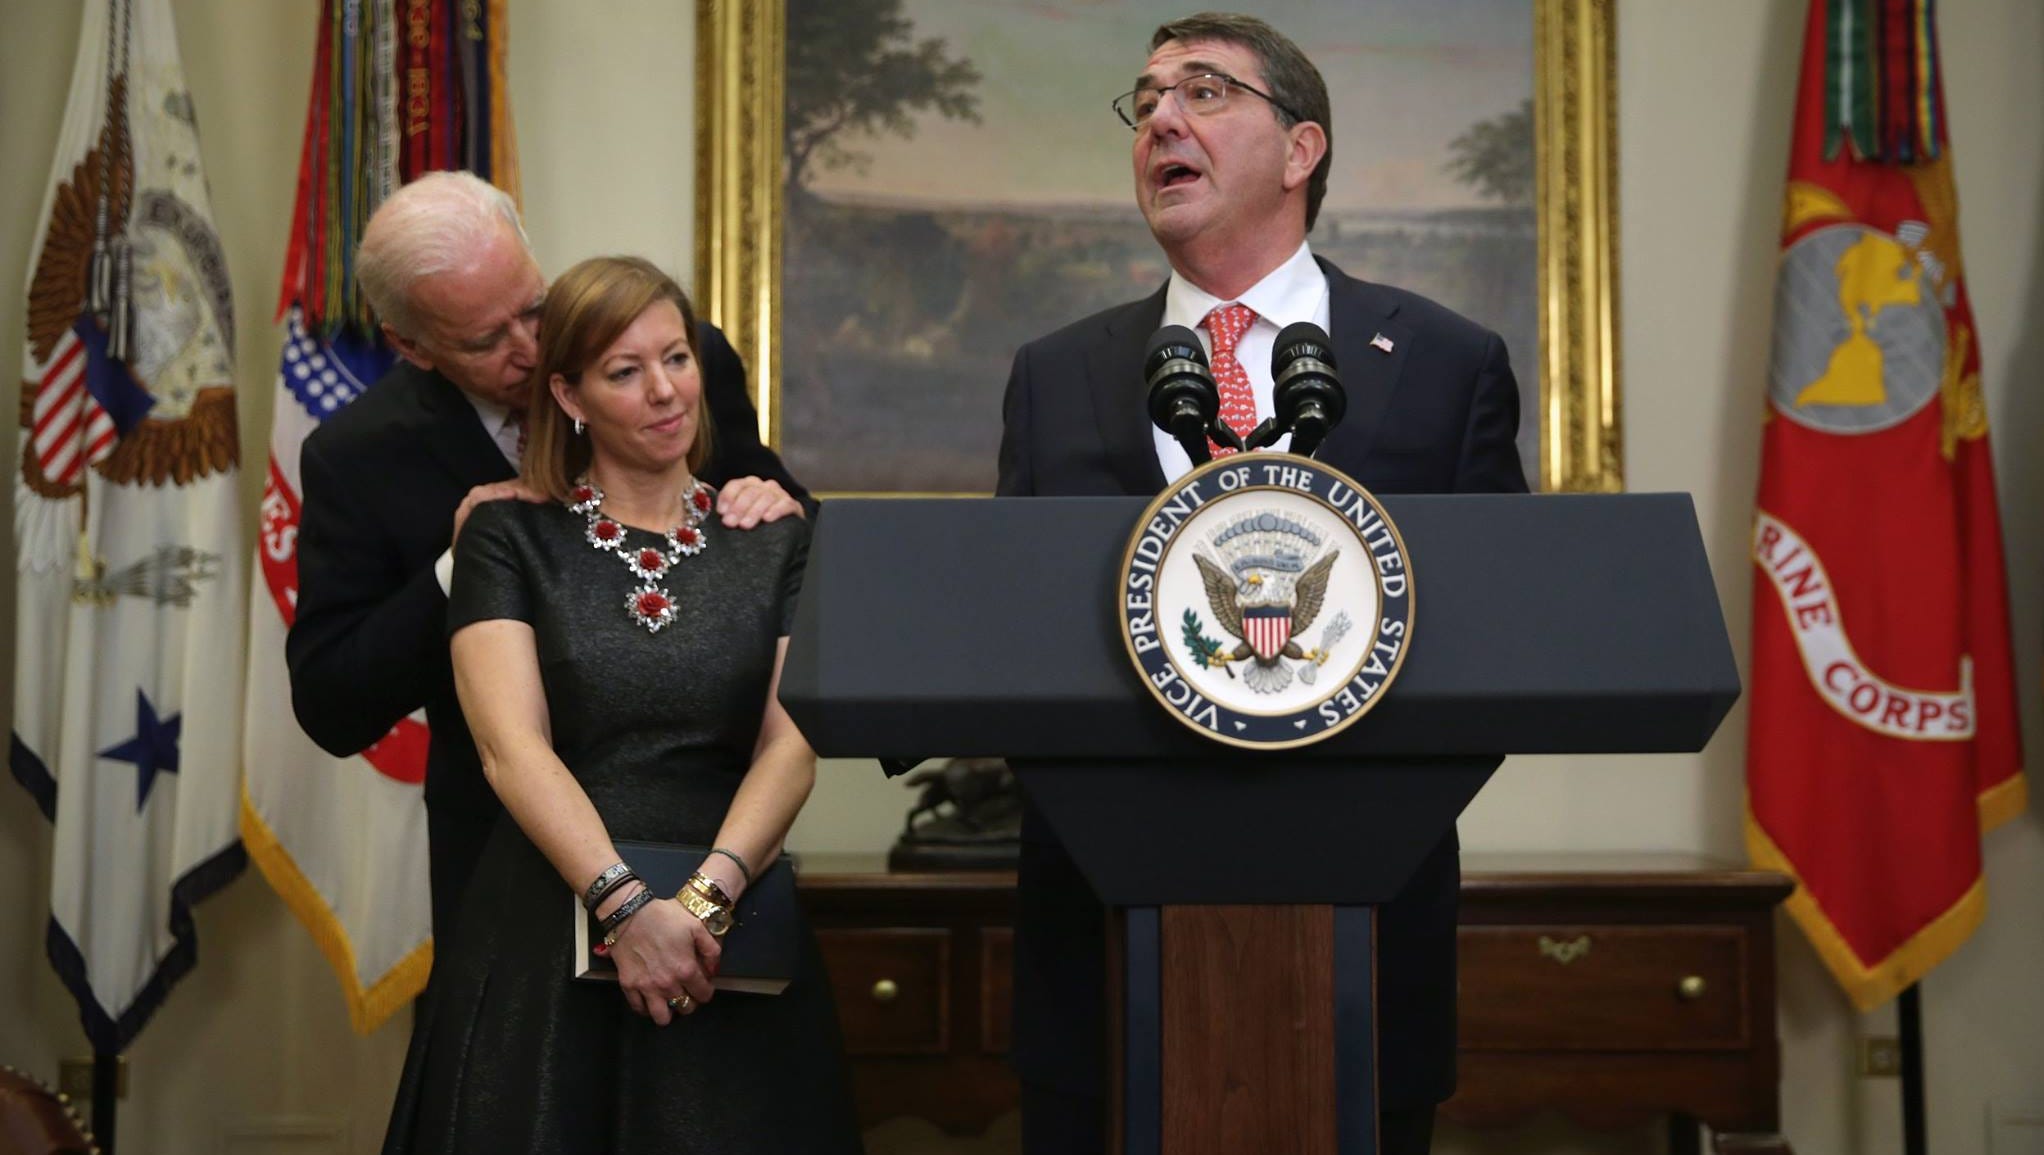 Sorg Prestigefyldte Romantik We want your touchy-feely Joe Biden photos